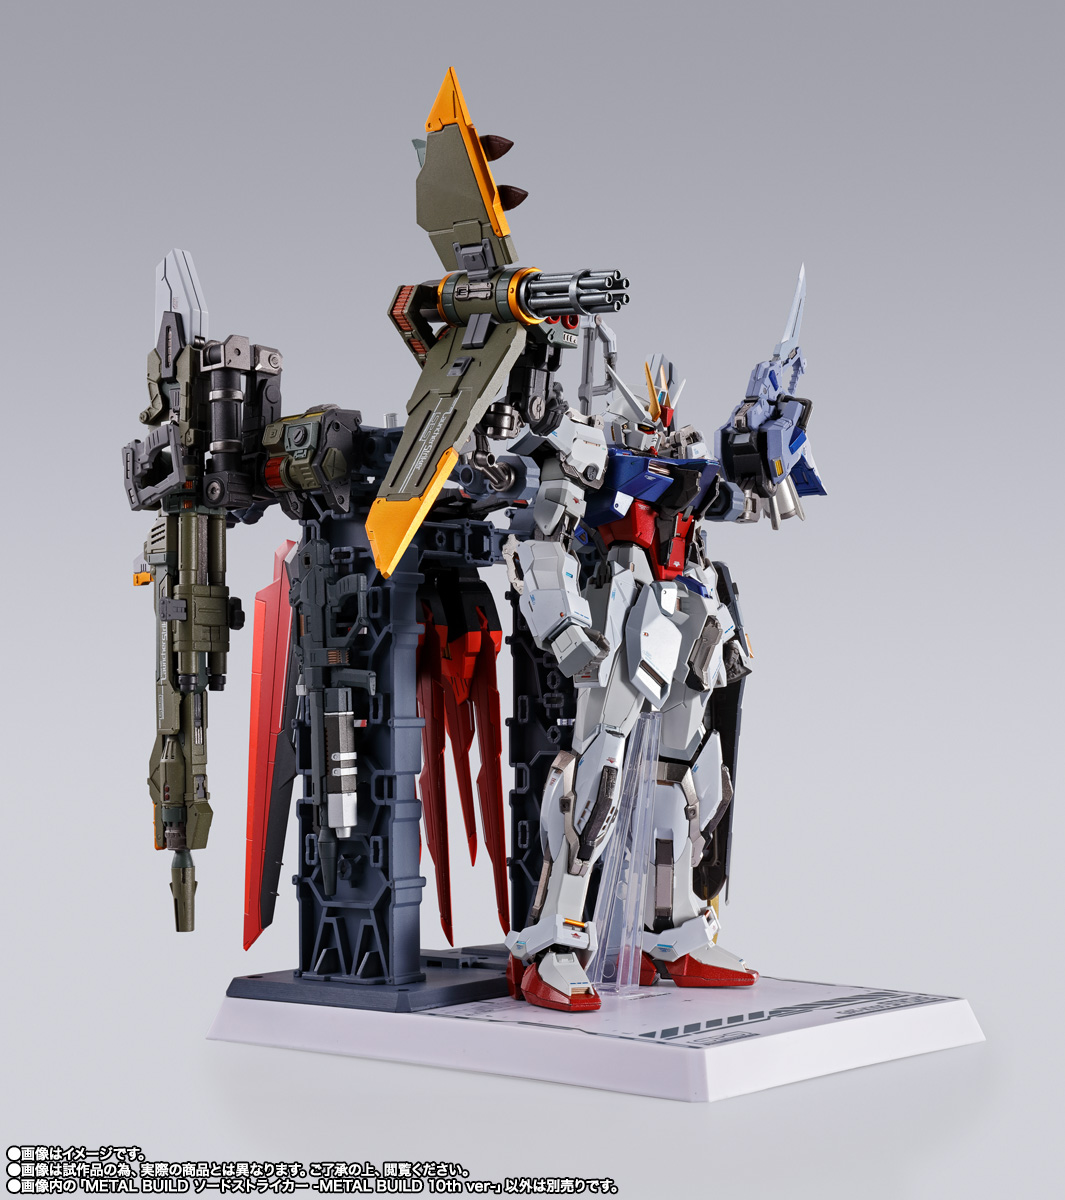 Mobile Suit Gundam Seed Figure METAL BUILD METAL BUILD LAUNCHER STRIKER-METAL BUILD 10th Ver.-